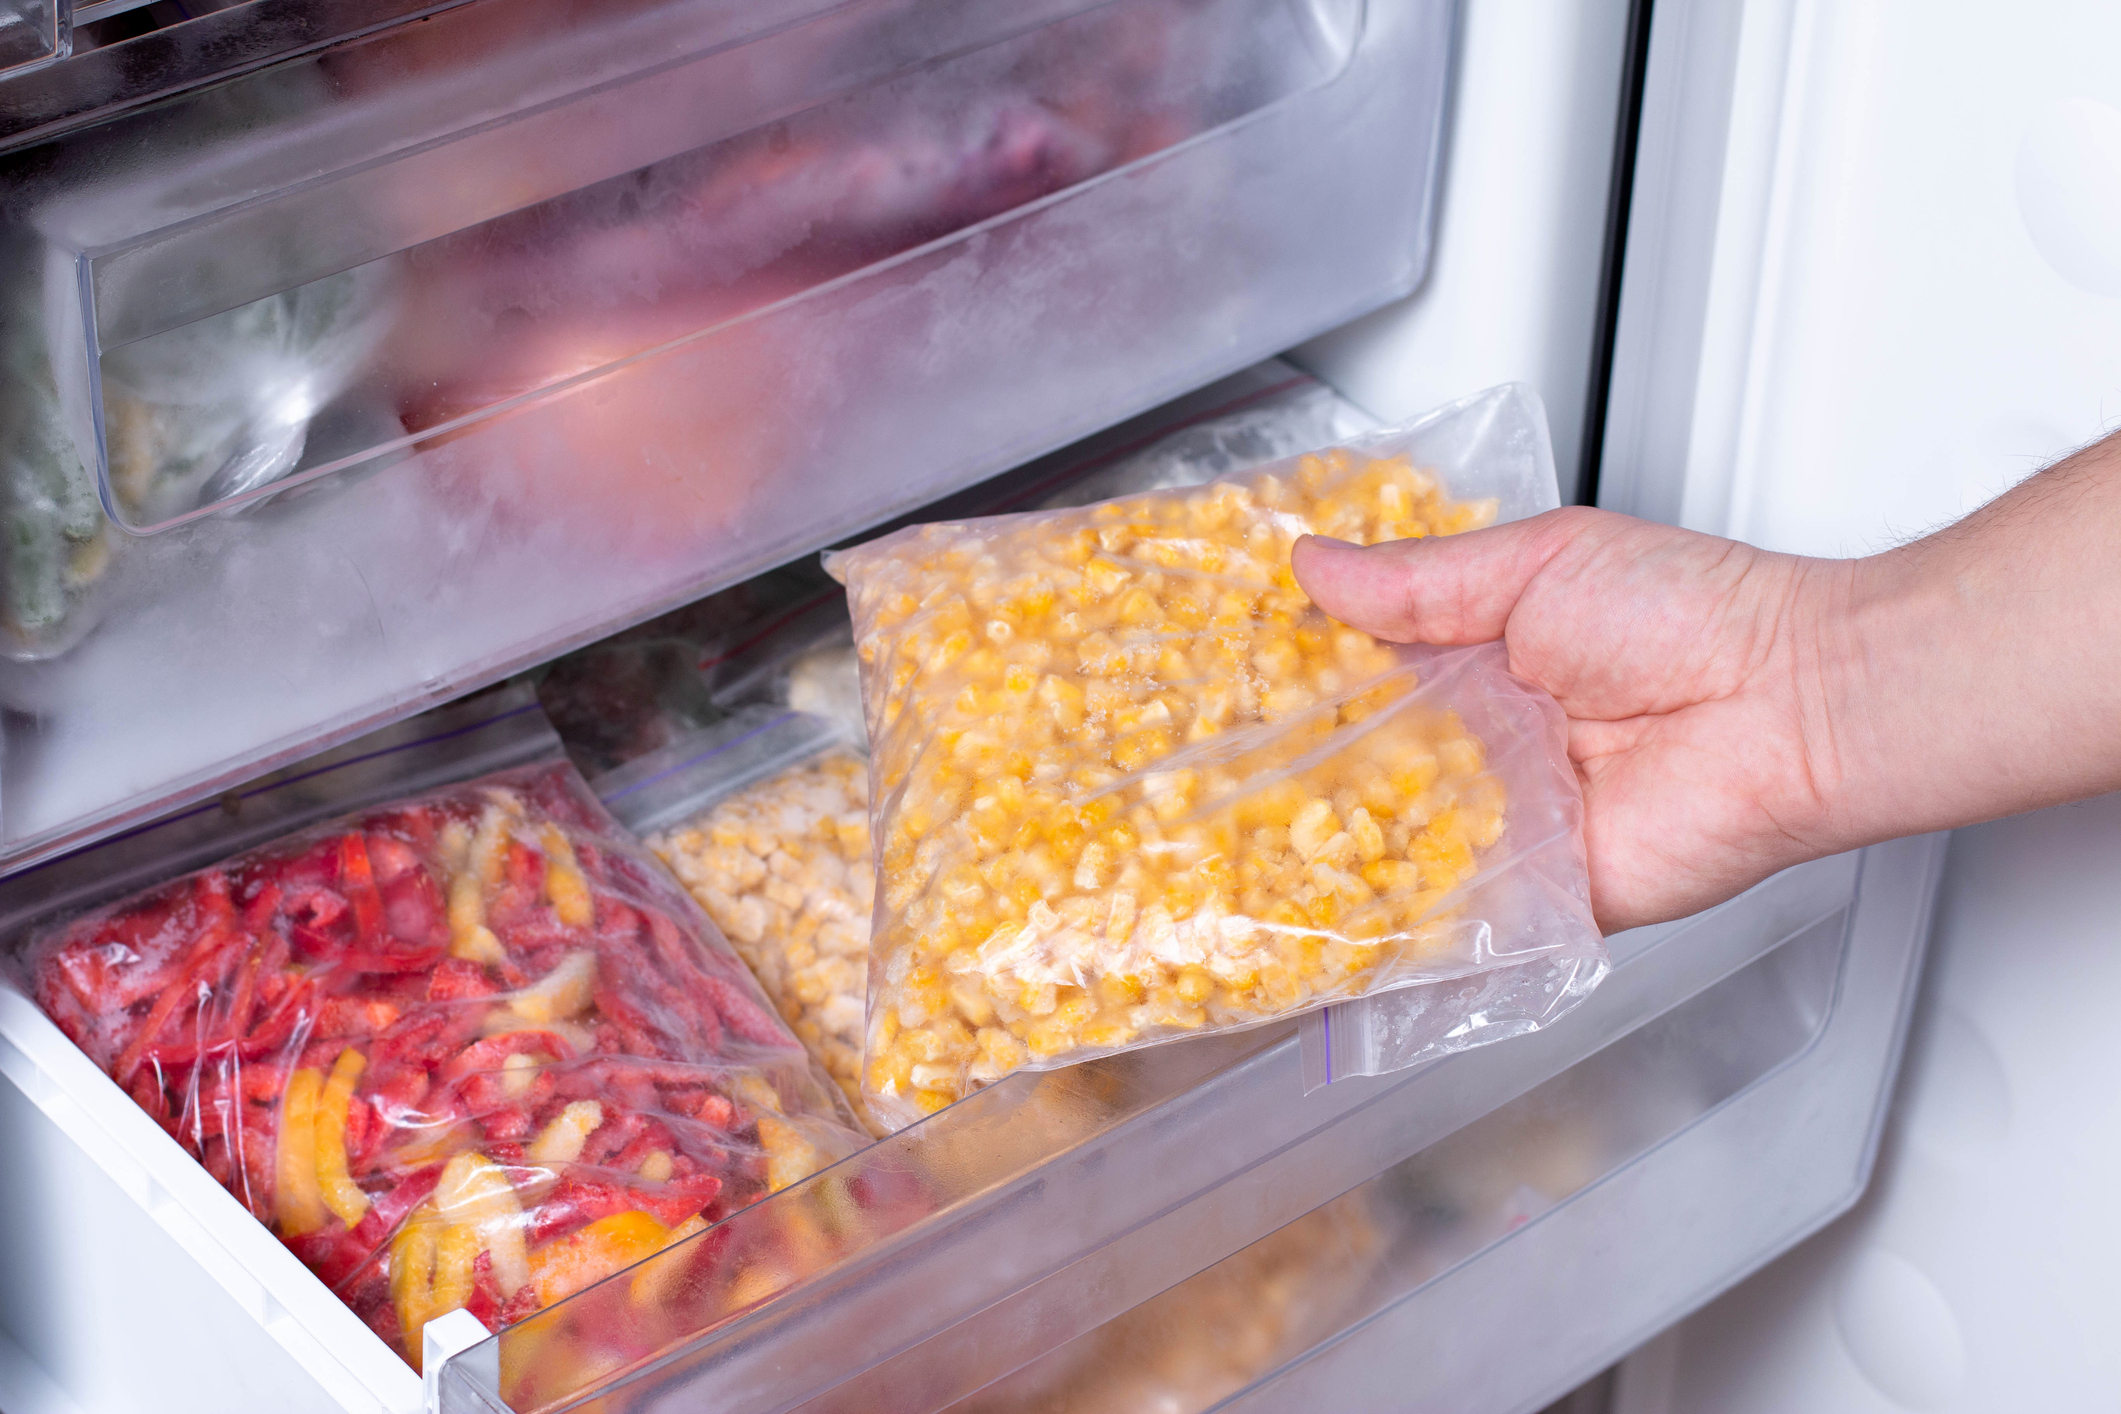 Fridge Storage for Food Safety